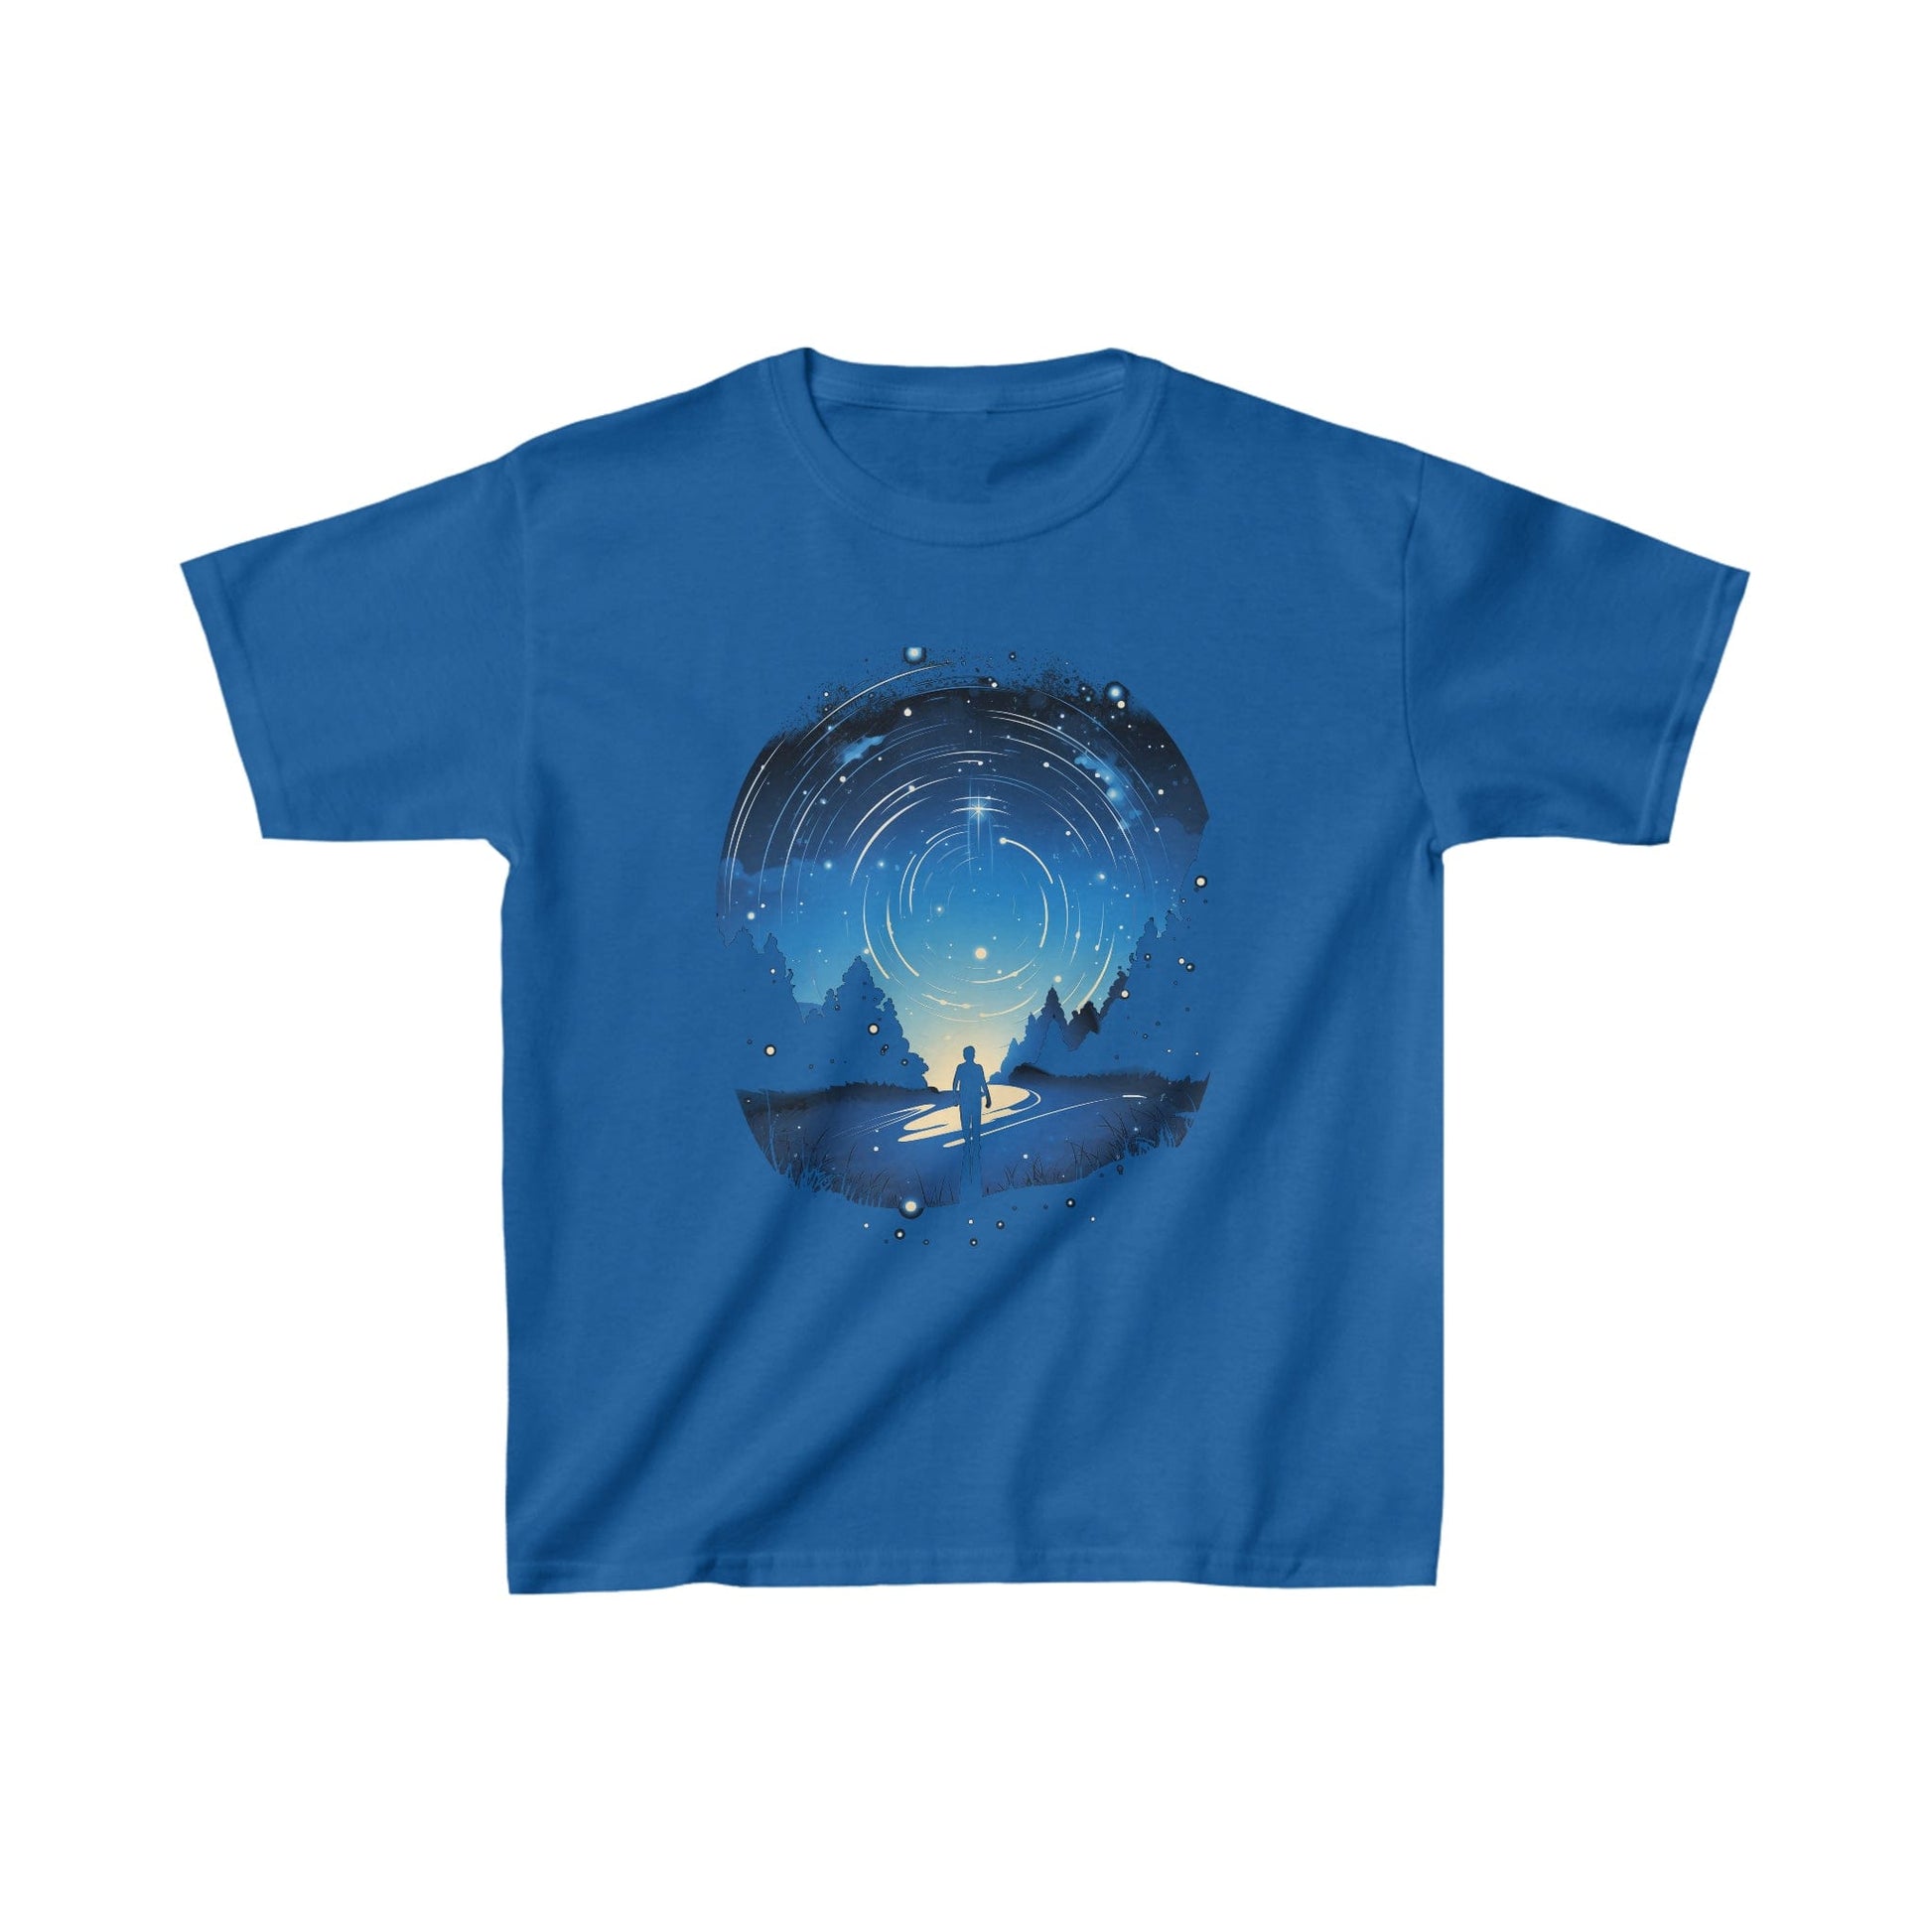 Kids clothes XS / Royal Youth Cosmic Swirl: Explorer Gazing at the Night Sky T-Shirt